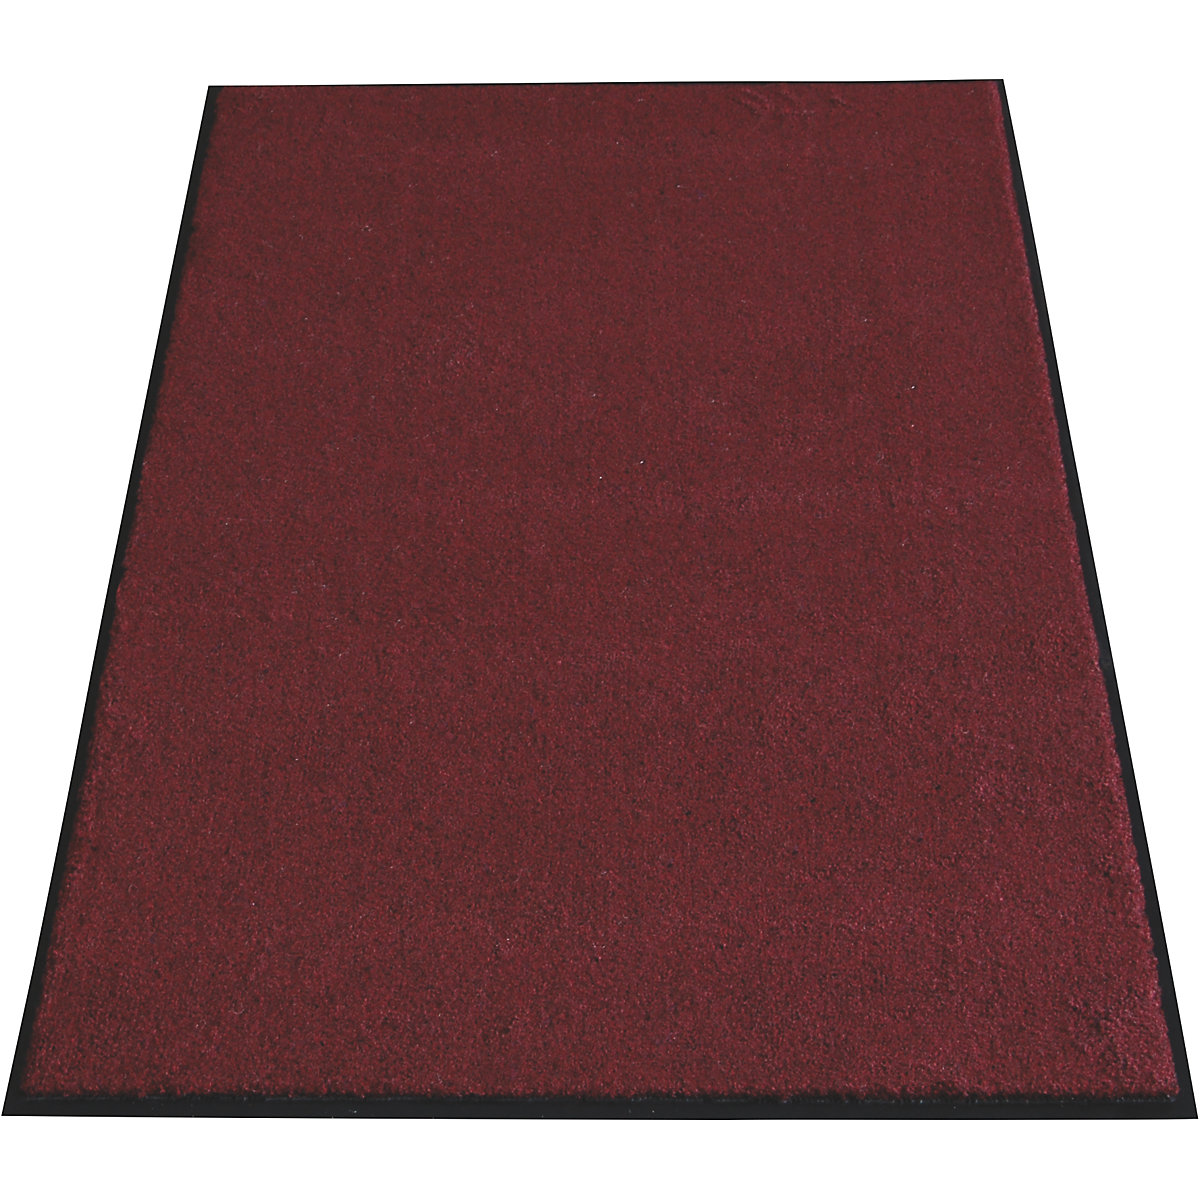 EAZYCARE AQUA entrance matting, LxW 1800 x 1200 mm, red